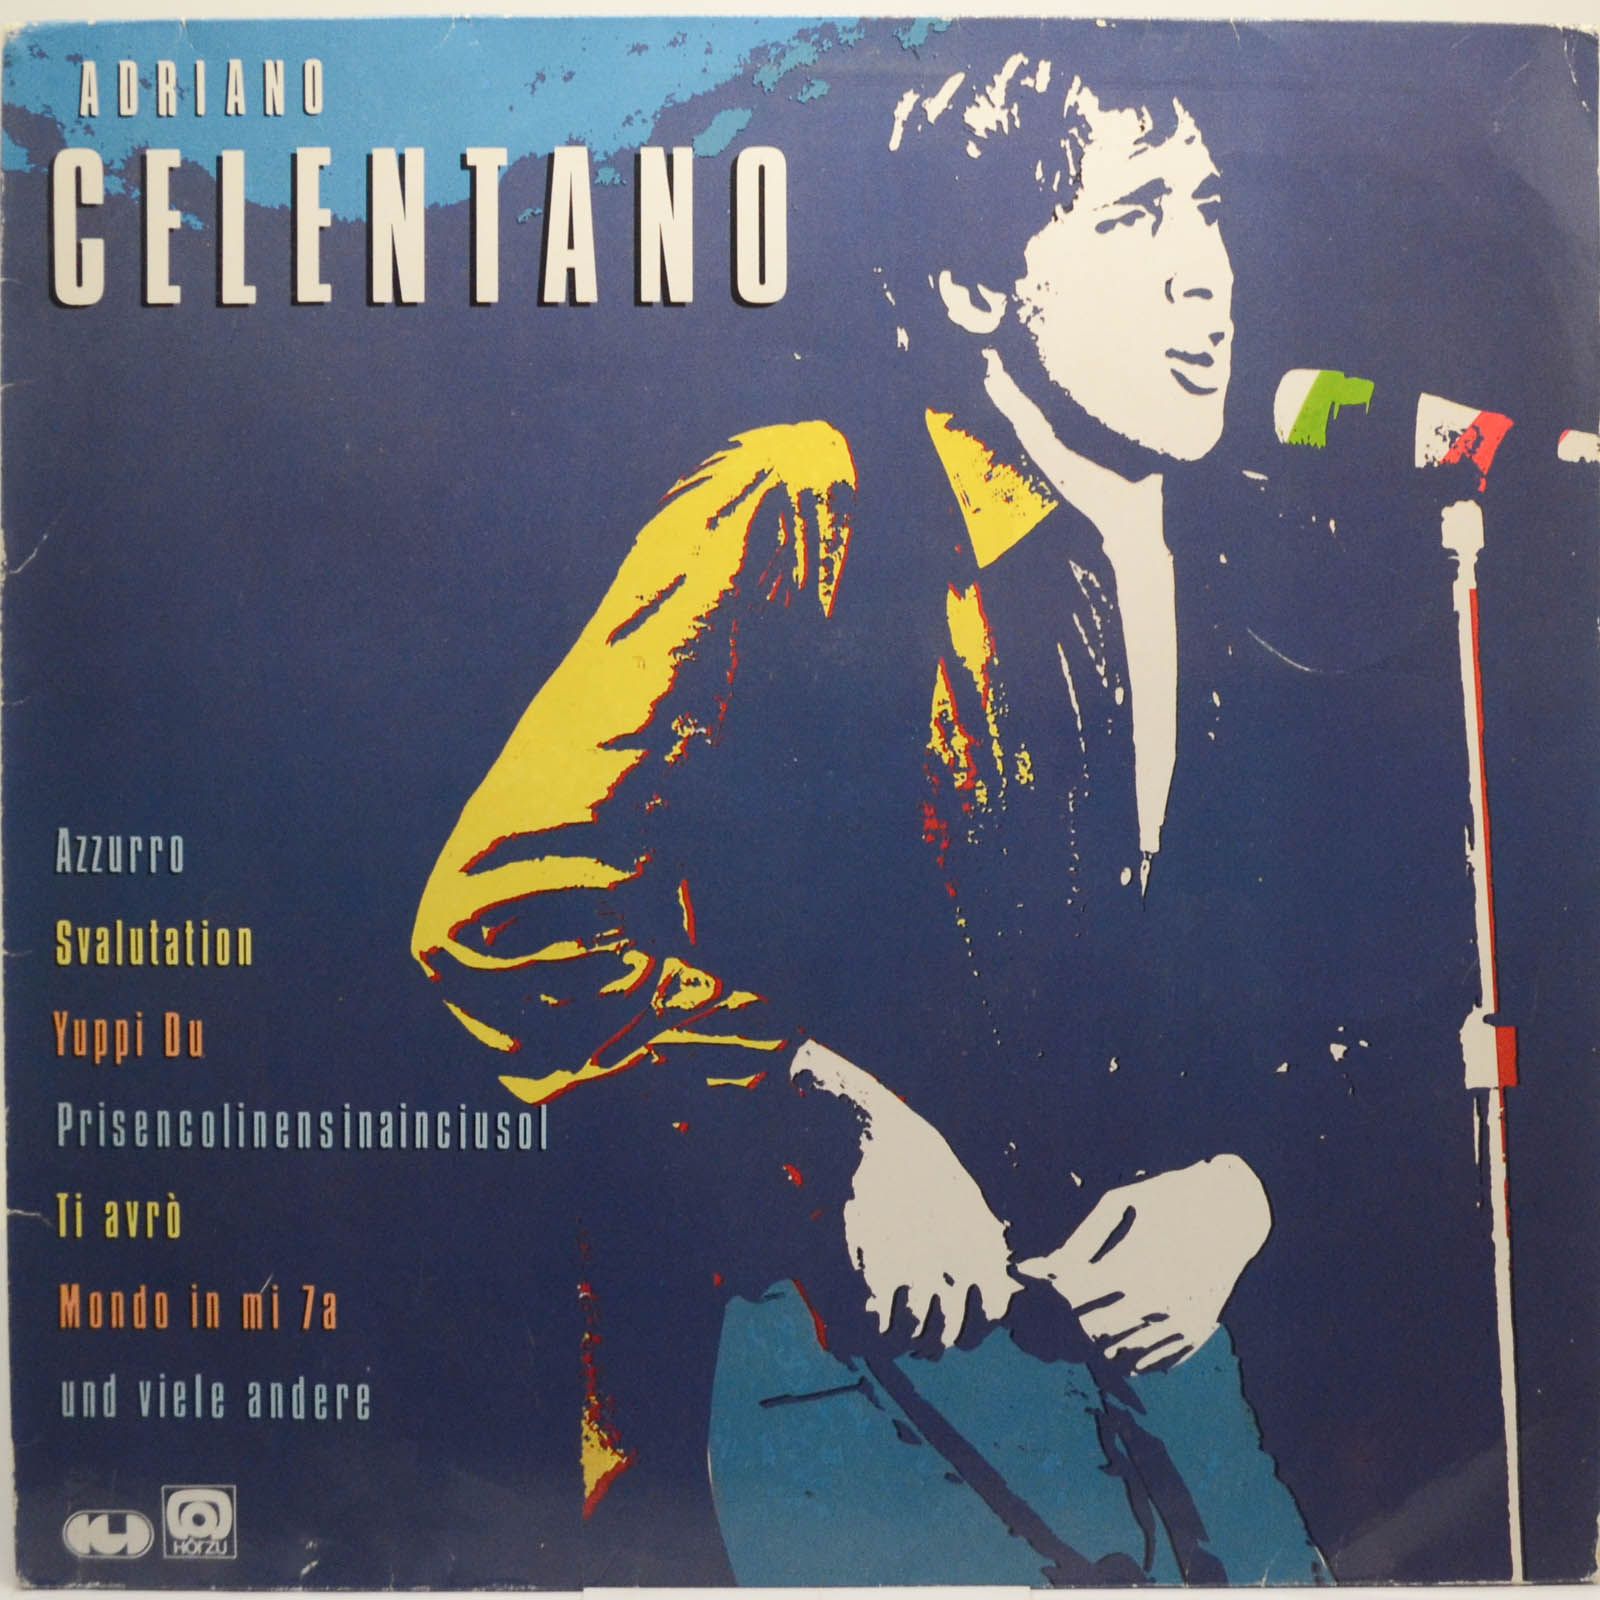 Adriano Celentano — Adriano Celentano, 1985